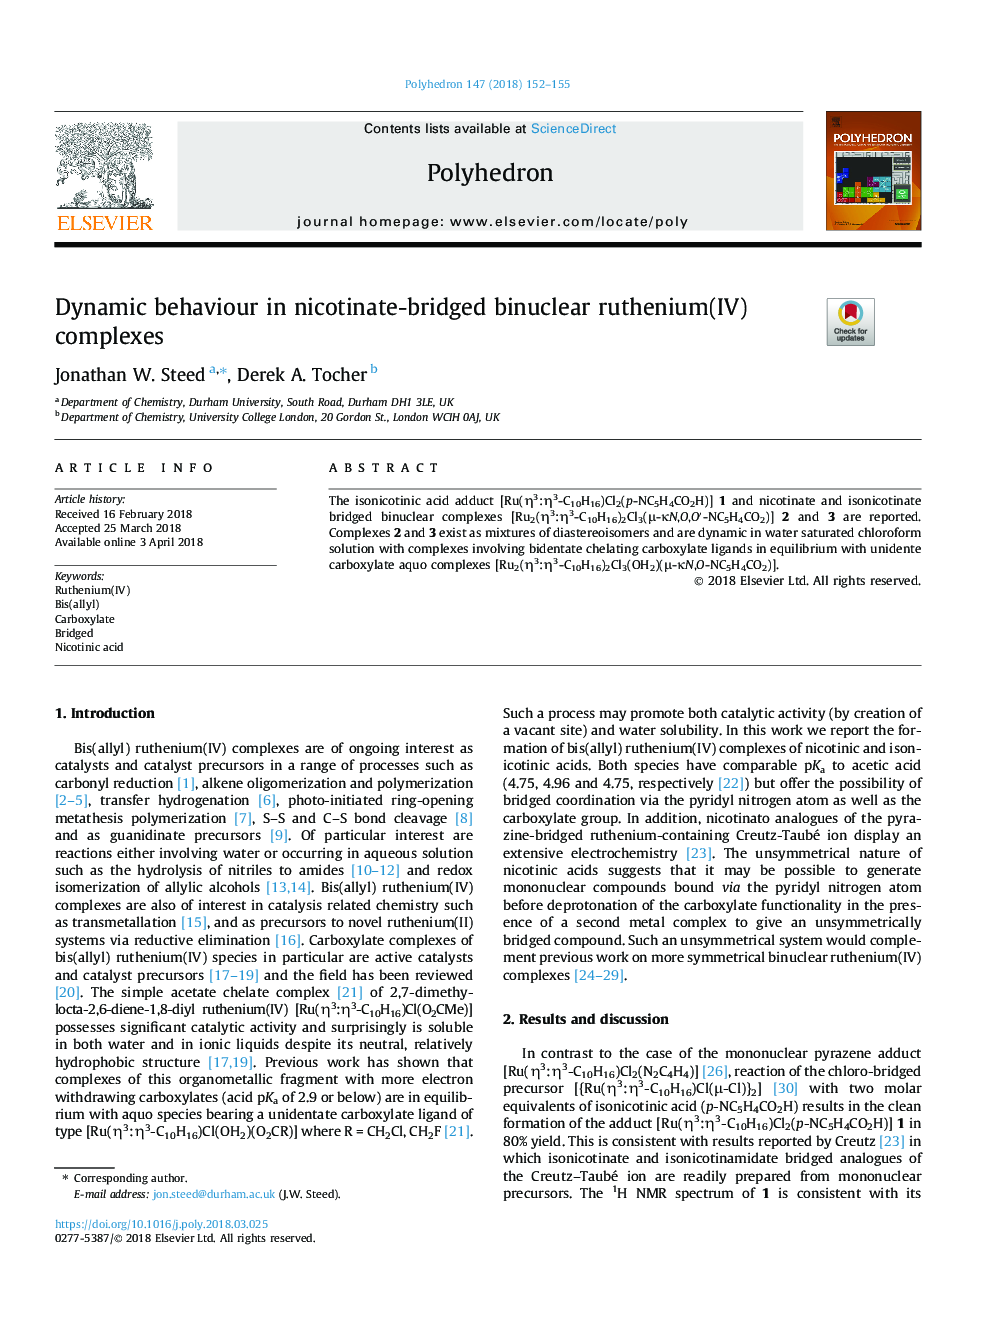 Dynamic behaviour in nicotinate-bridged binuclear ruthenium(IV) complexes